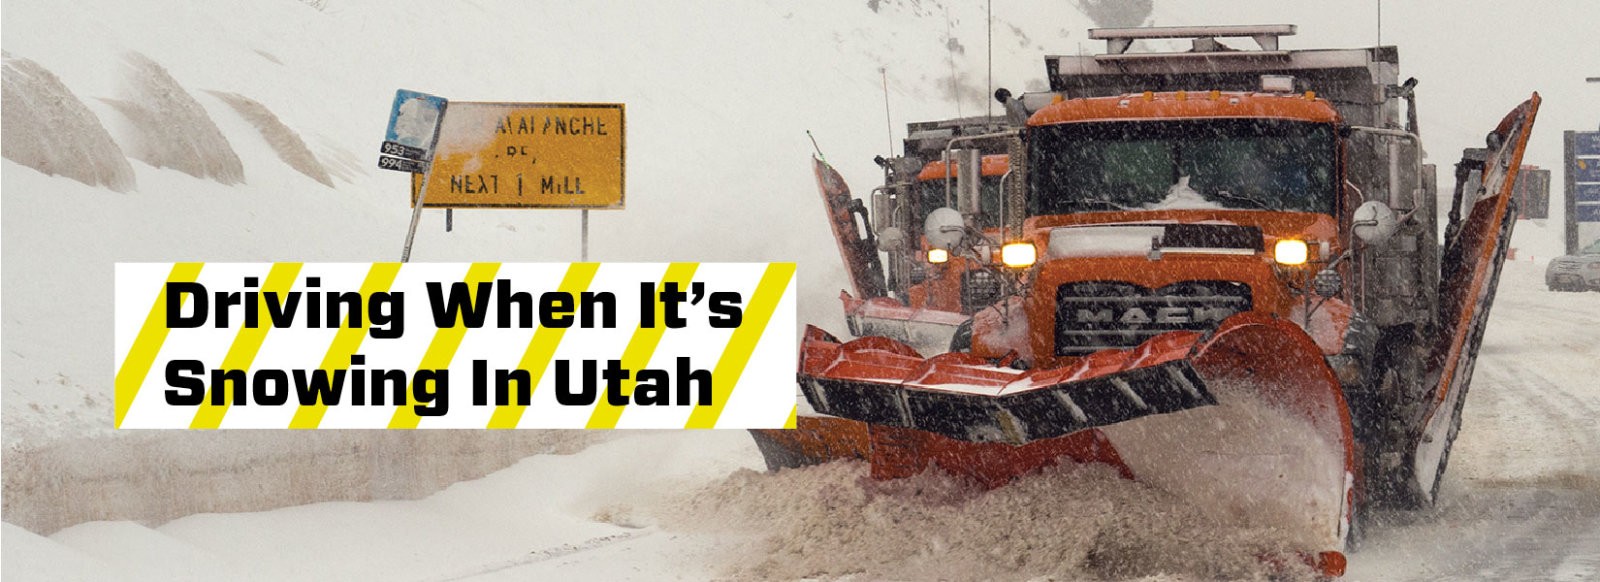 Winter Driving Tips For Utah Ski Resorts